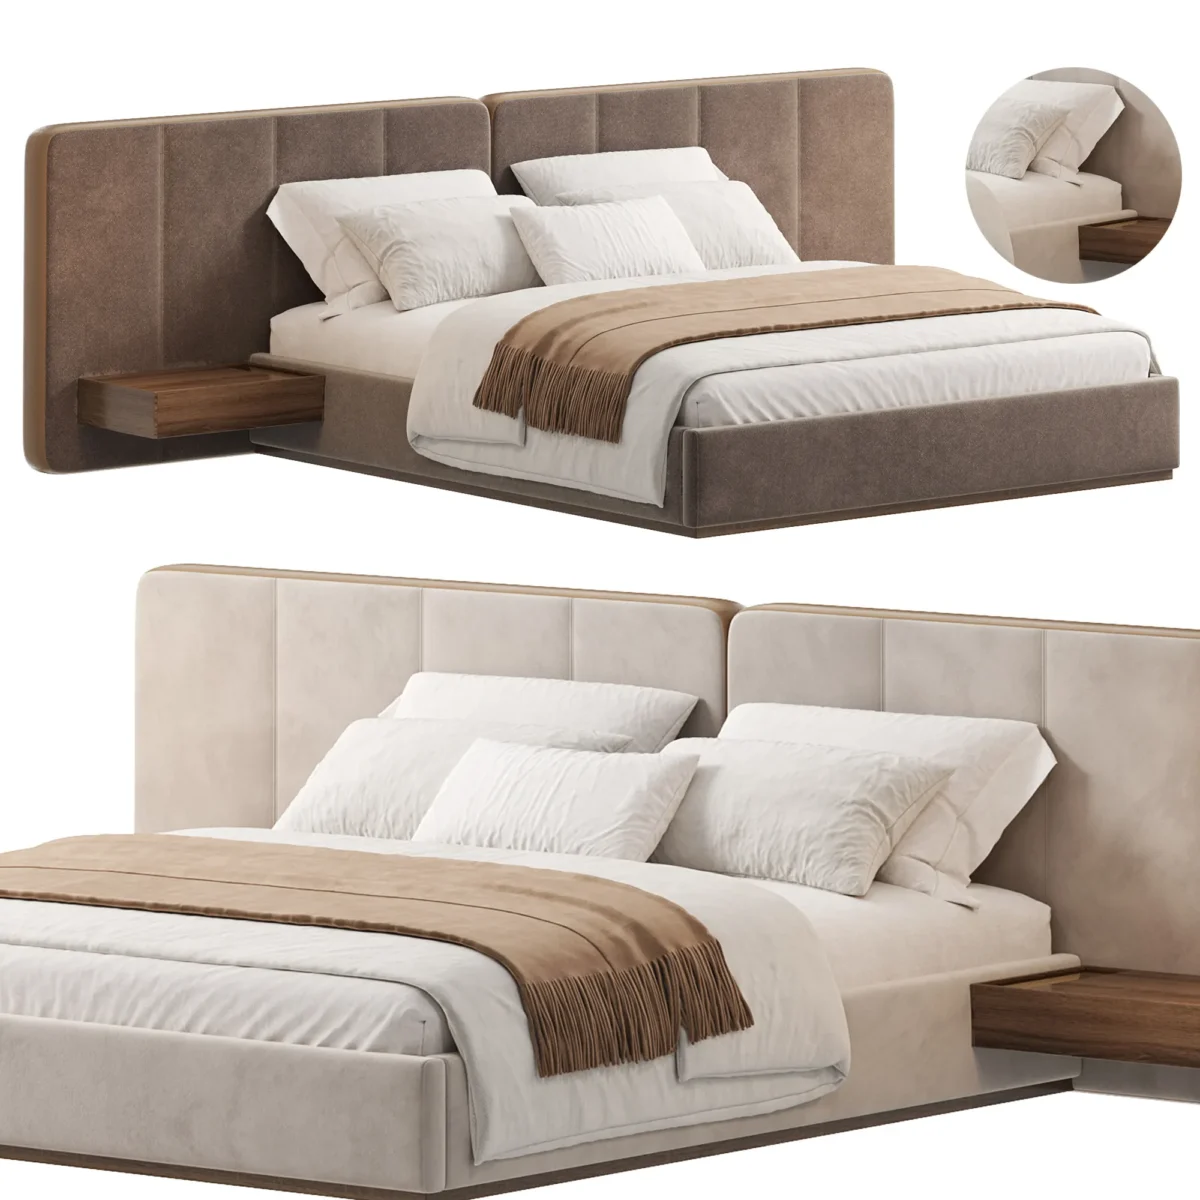 BONNIE Bed 3D model download on cg.market, 3ds max, Corona Render